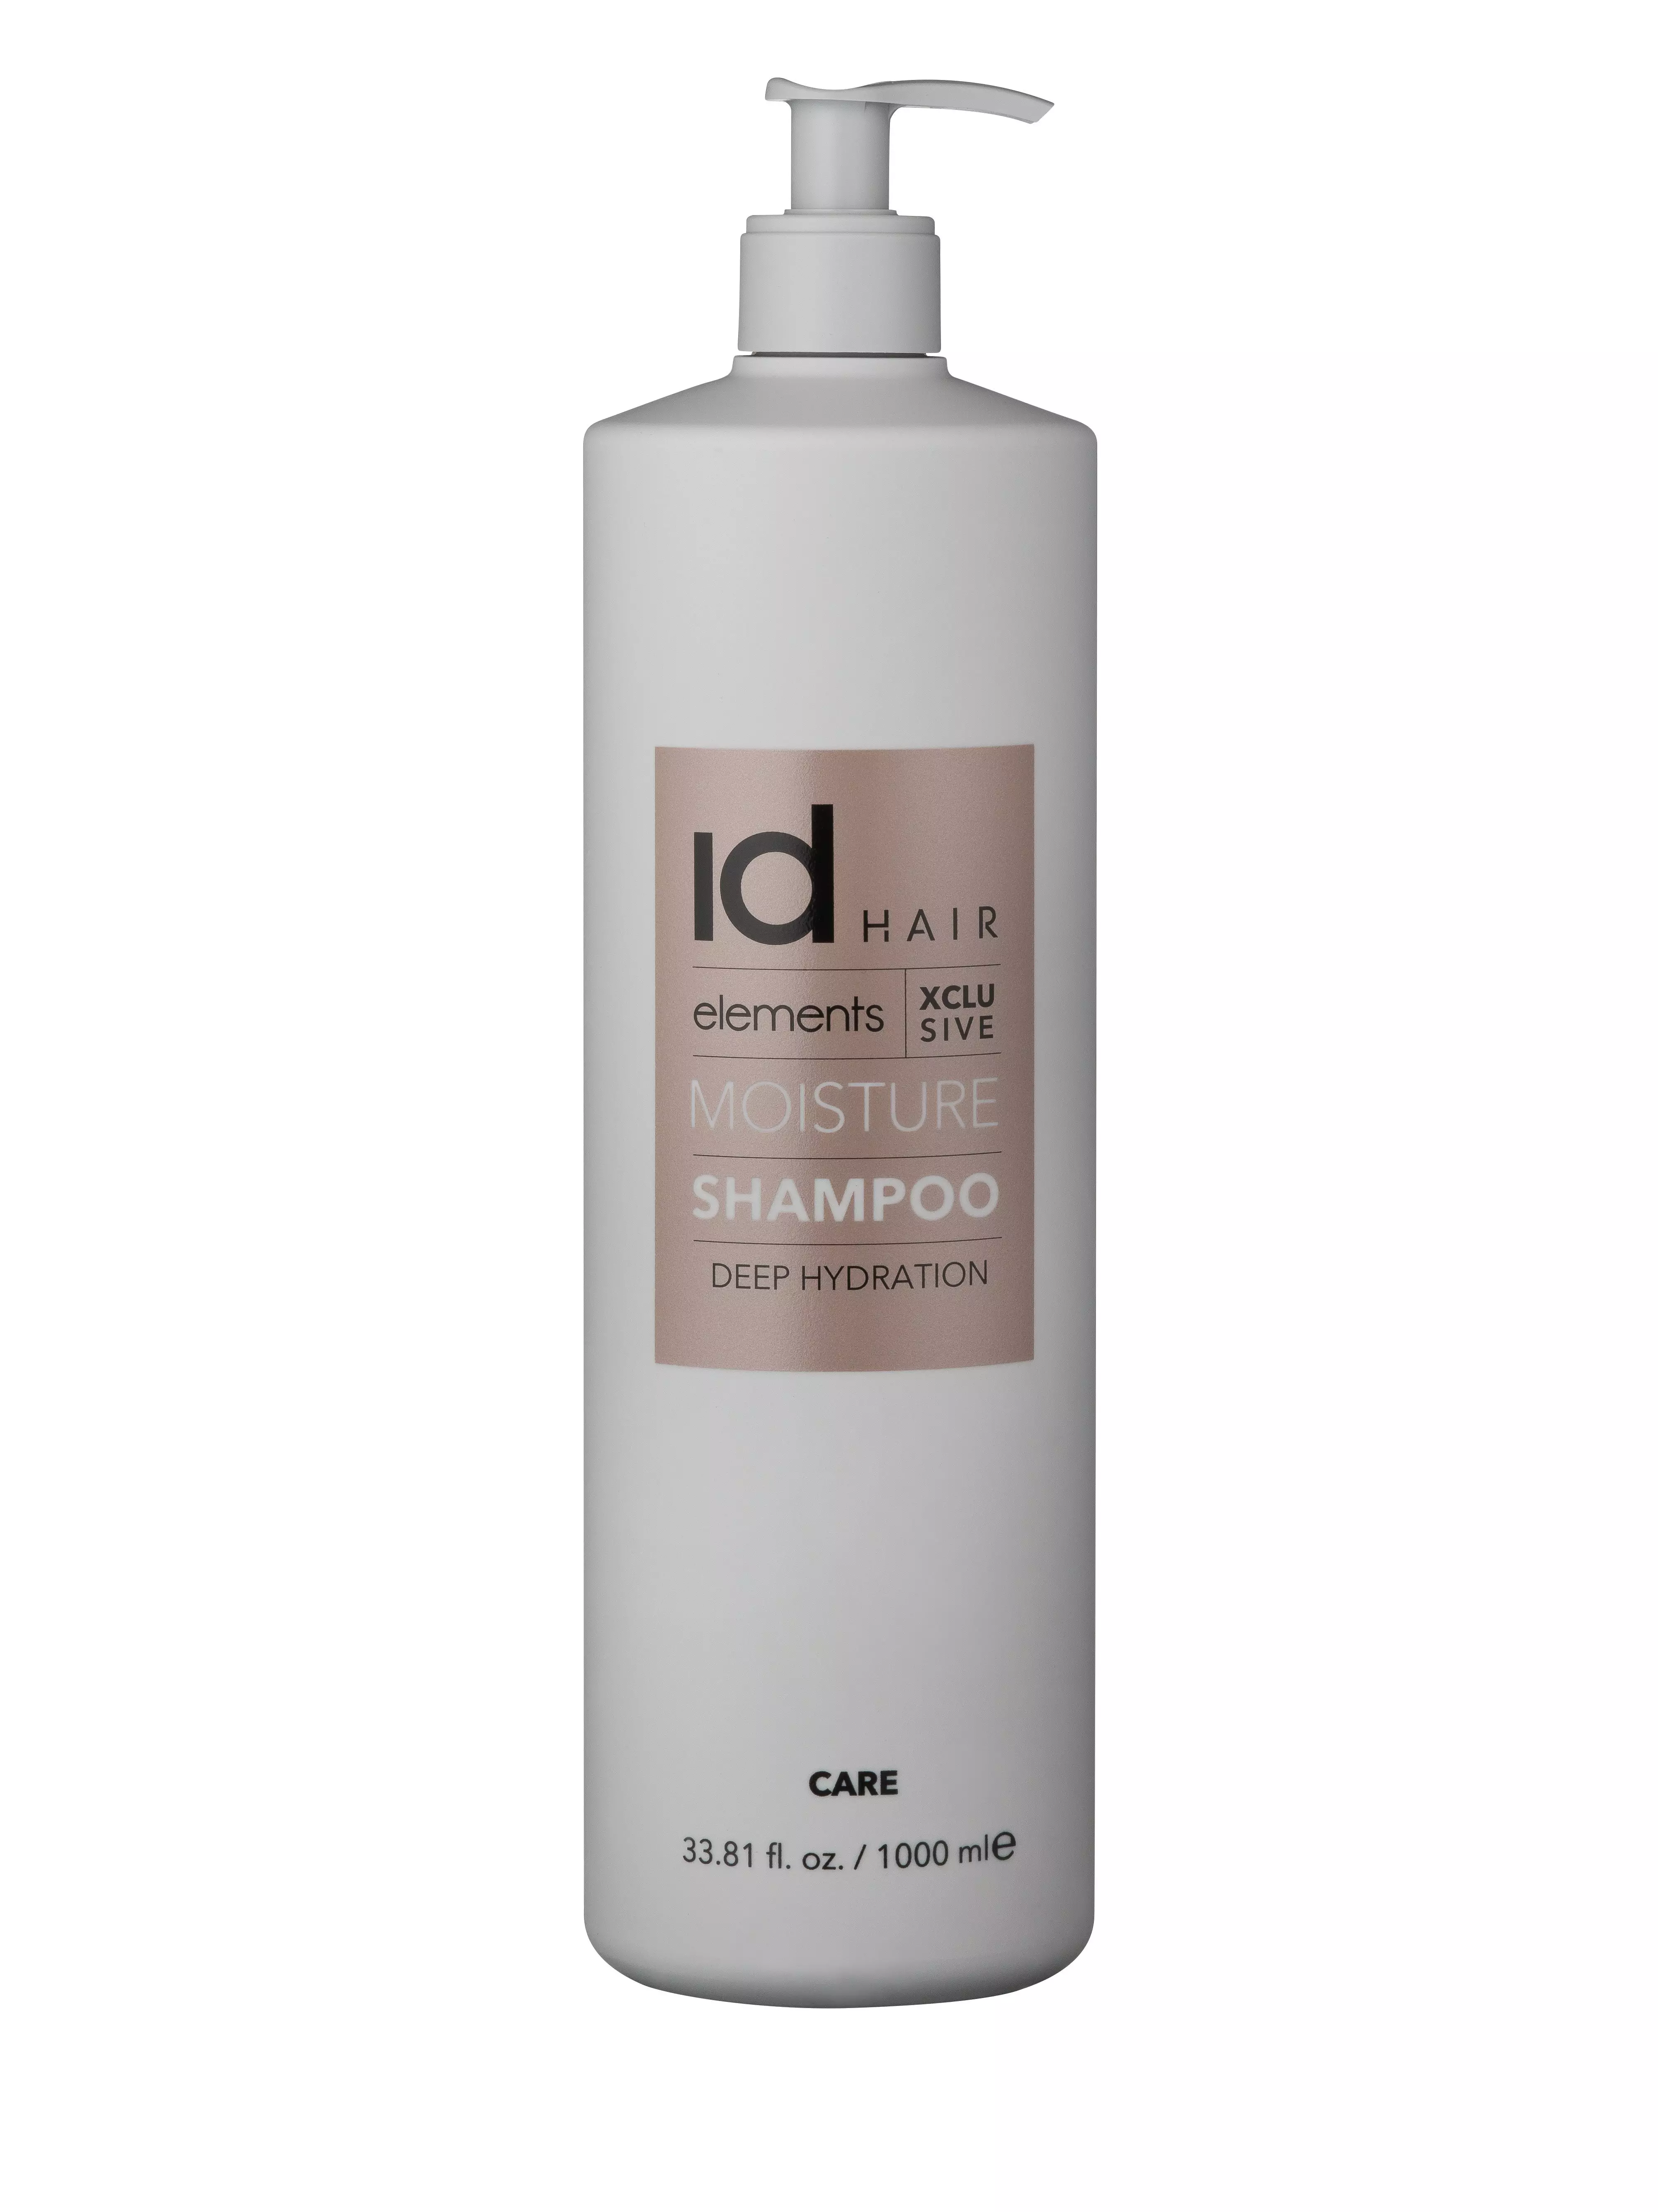 Idhair Elements Xclusive Moisture Shampoo 1000